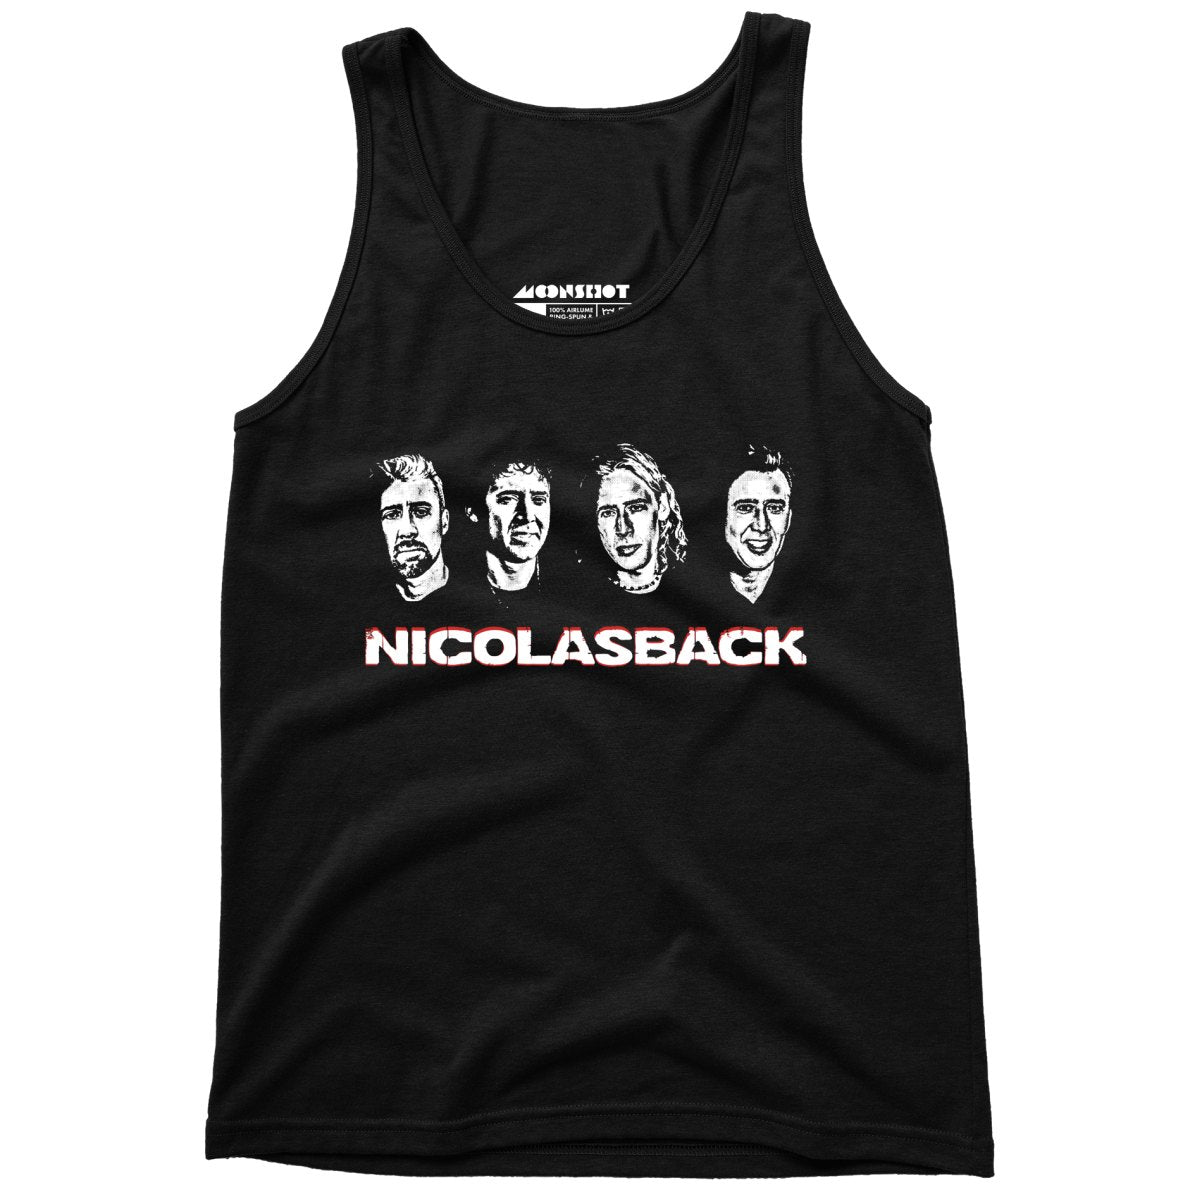 Nicolasback - Nickelback Nicolas Cage Mashup - Unisex Tank Top